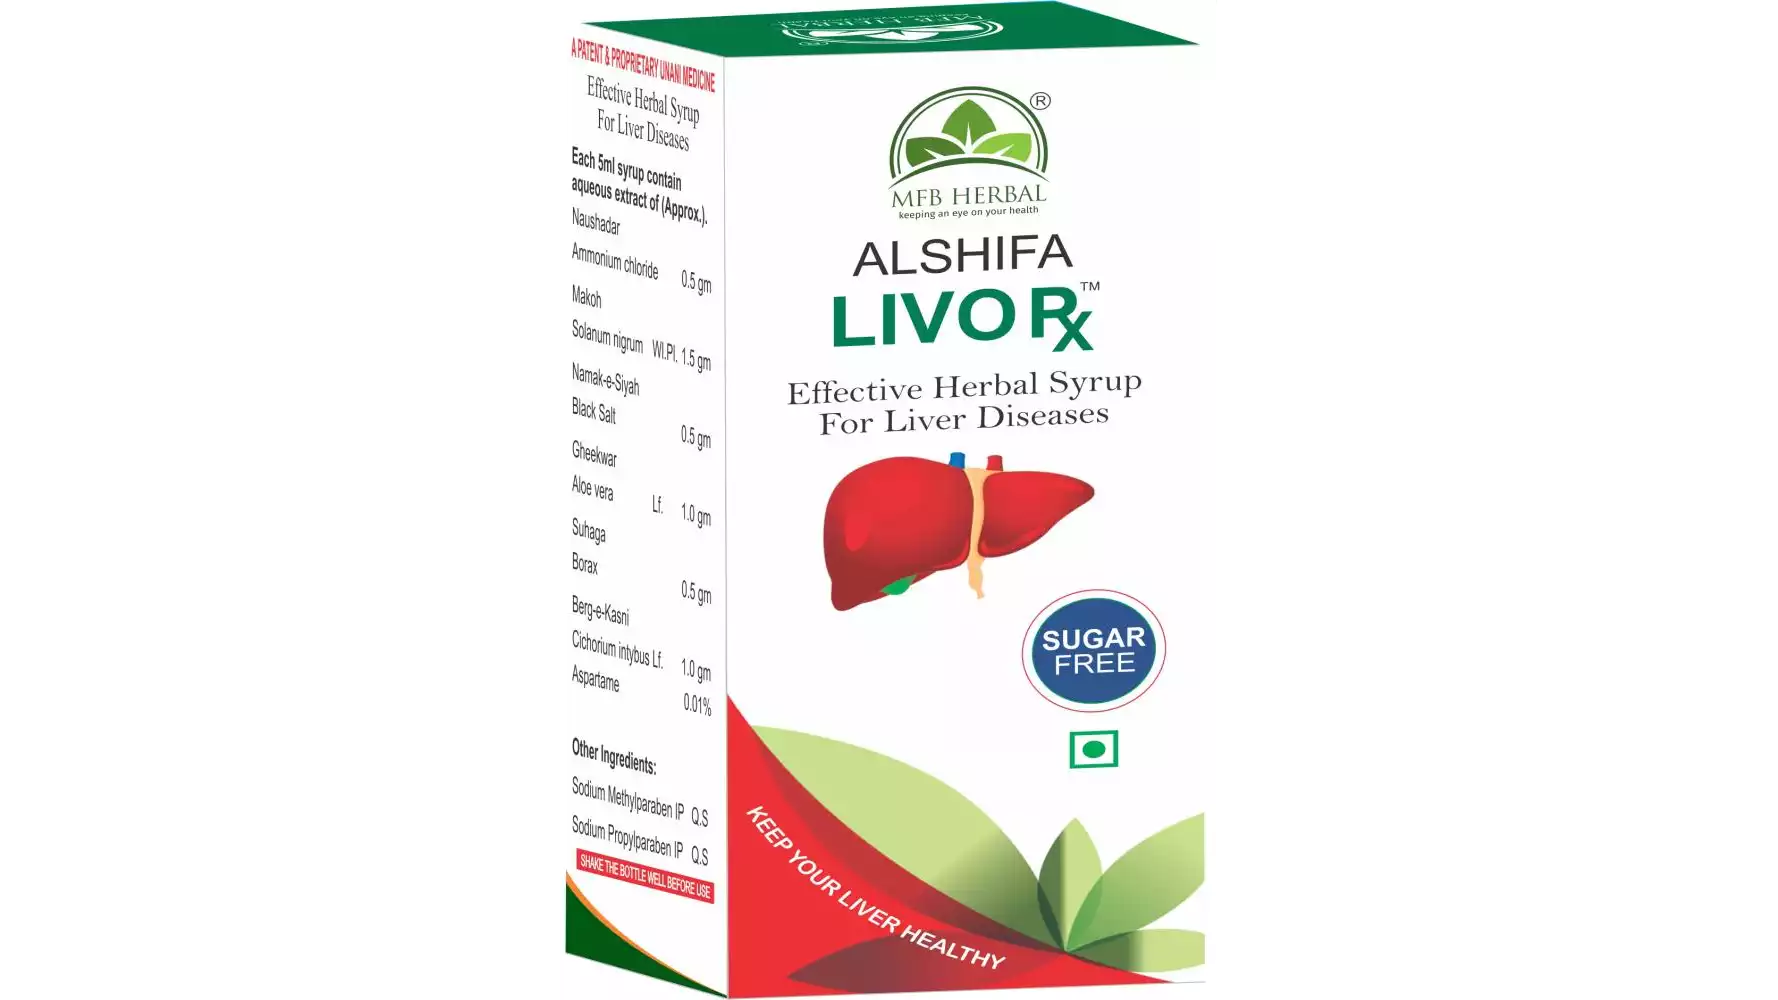 MFB Herbal Livorx Syrup (200ml)